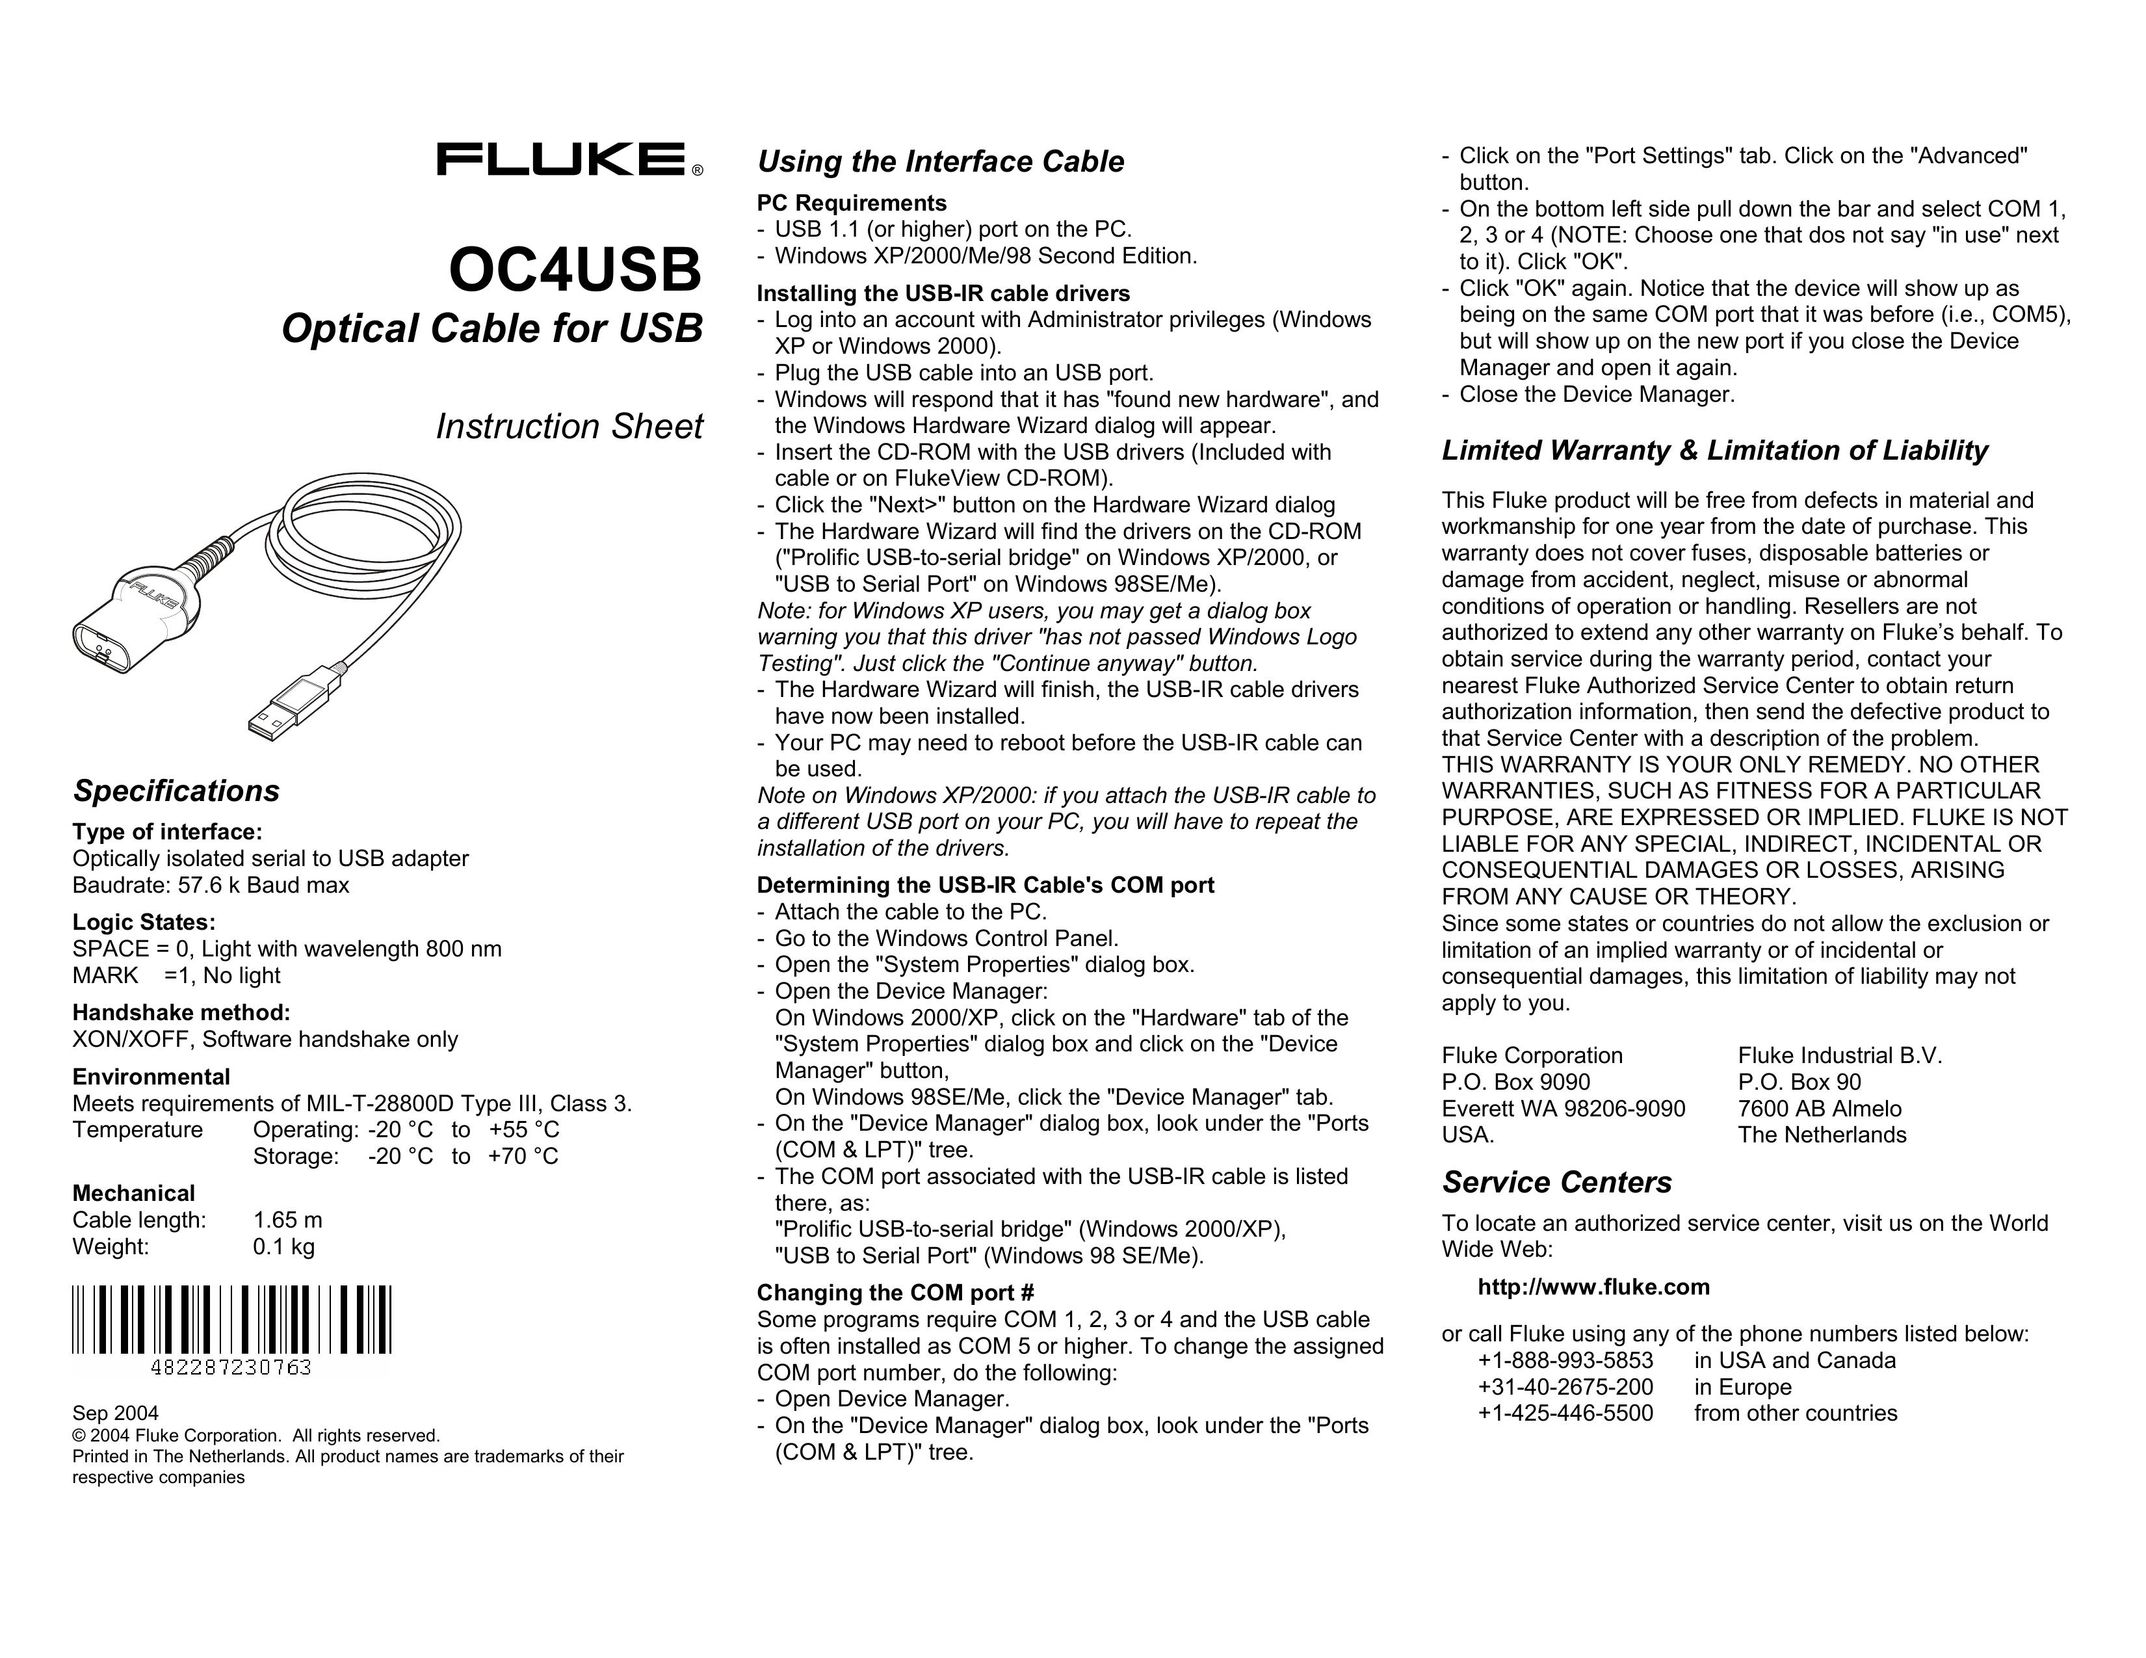 Fluke OC4USB TV Cables User Manual